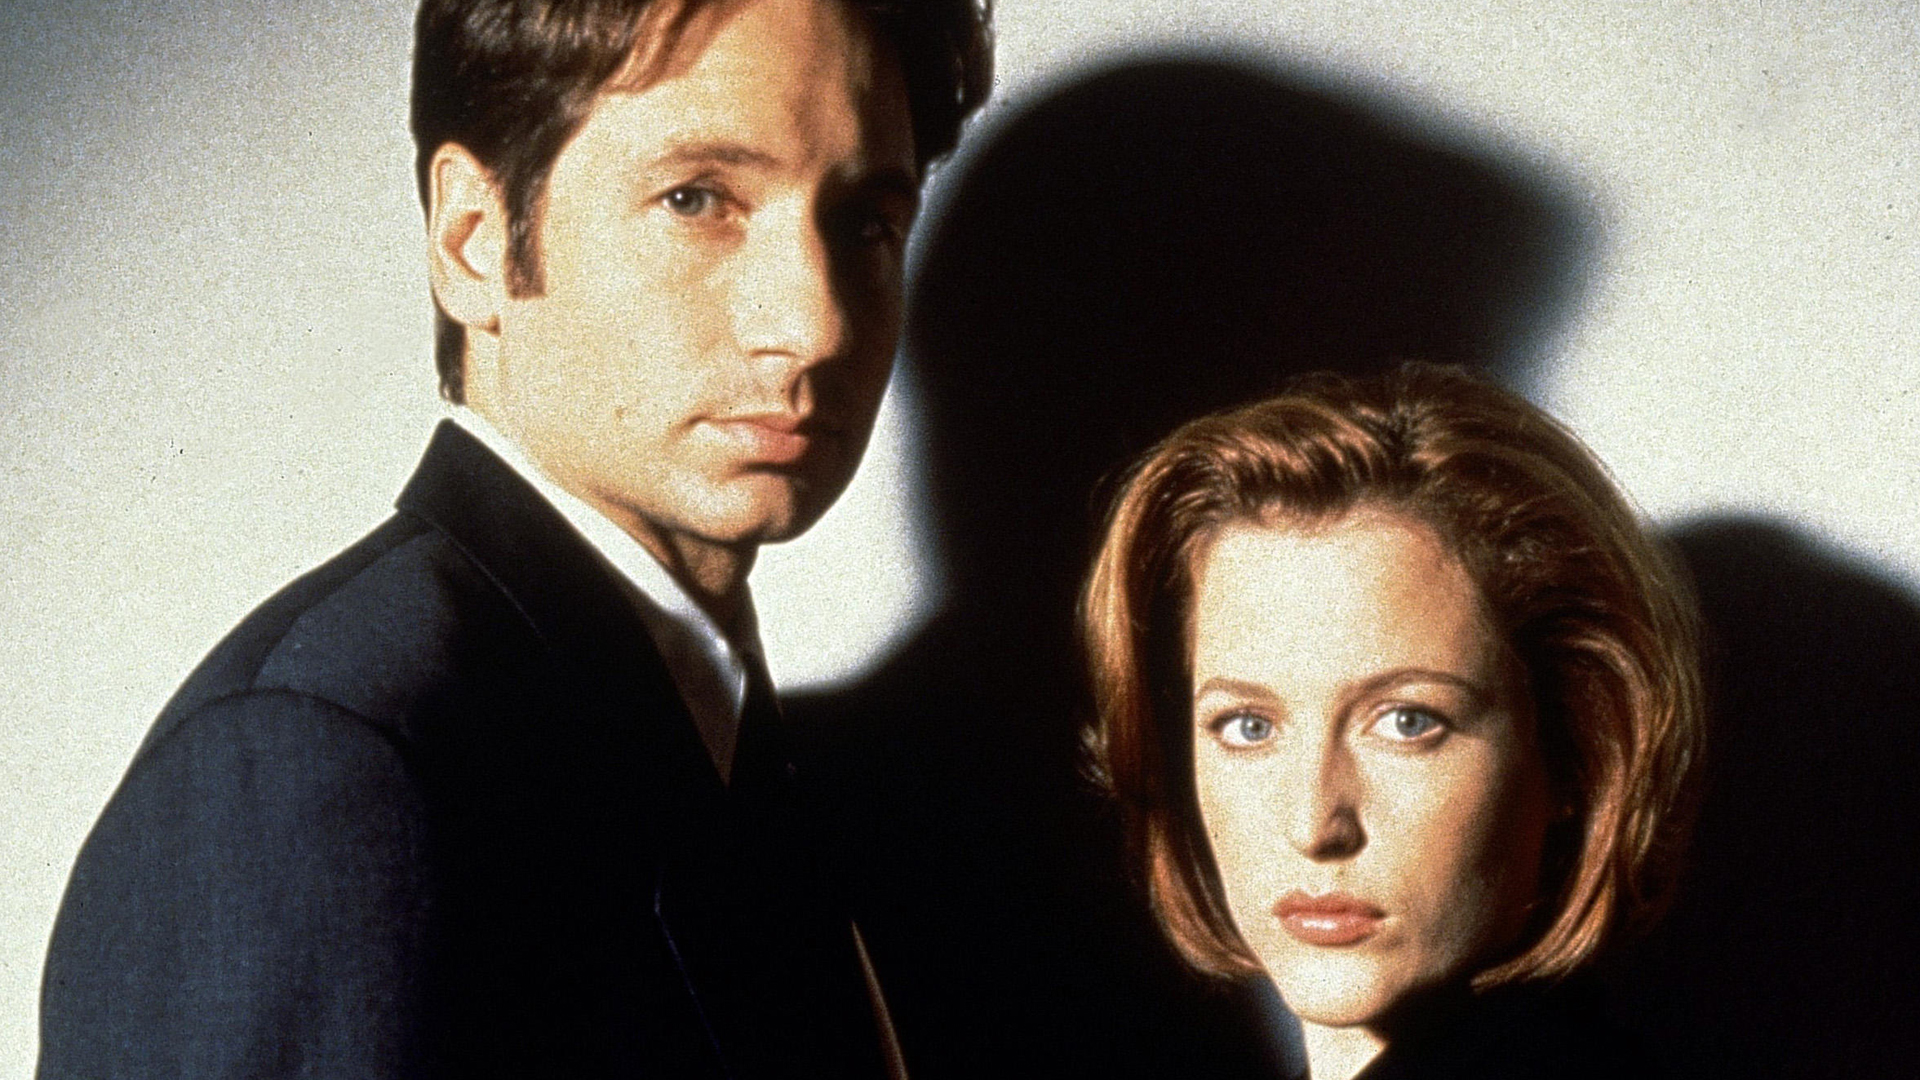 David Duchovny als Fox Mulder und Gillian Anderson als Dana Scully